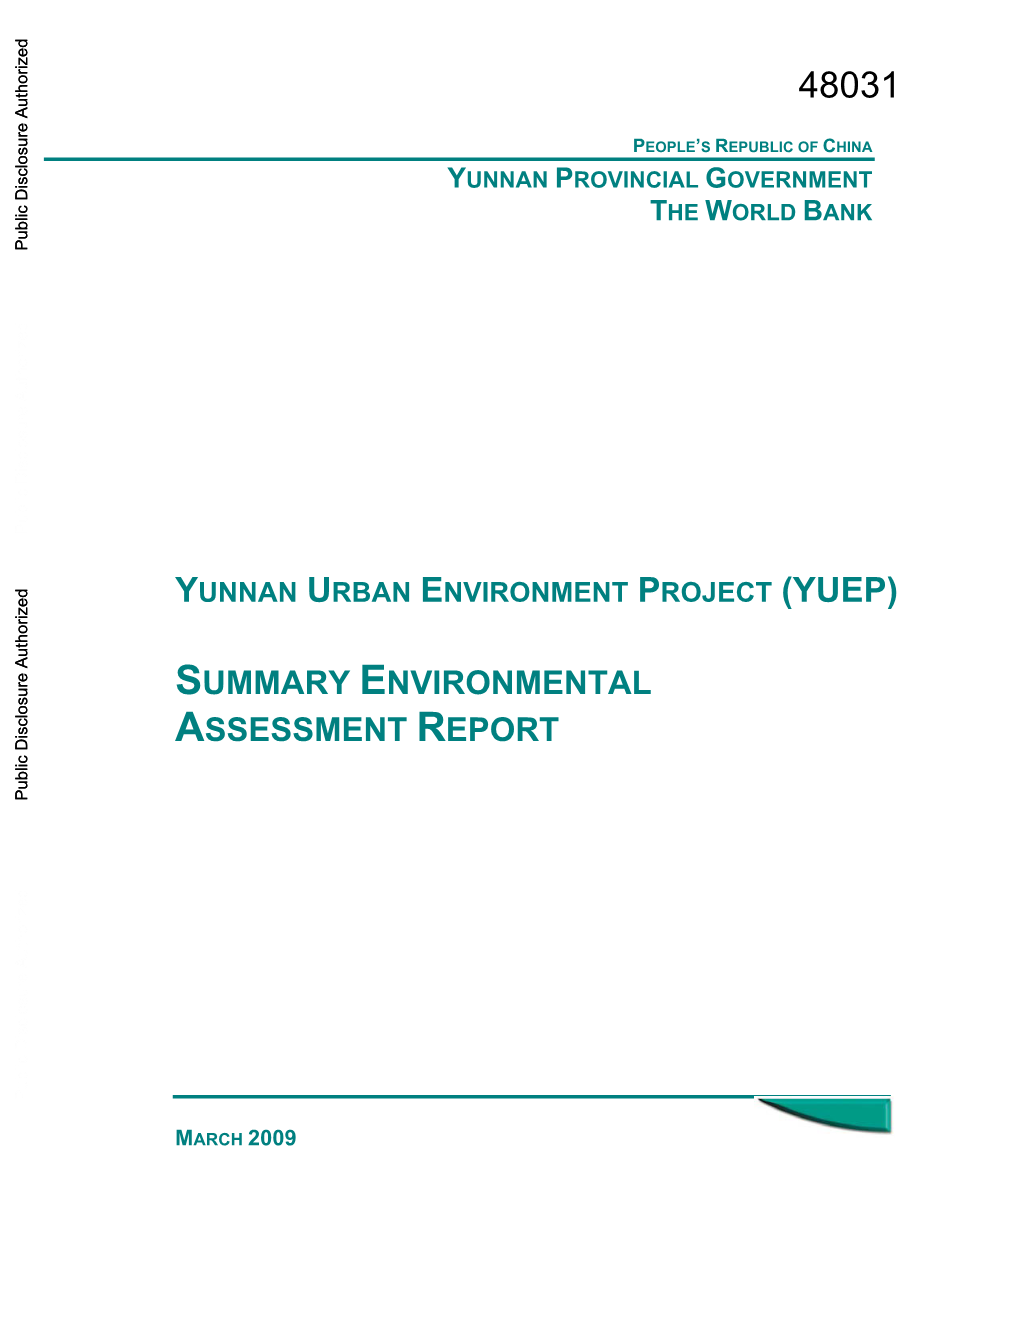 Summary Environmental Assessment Report